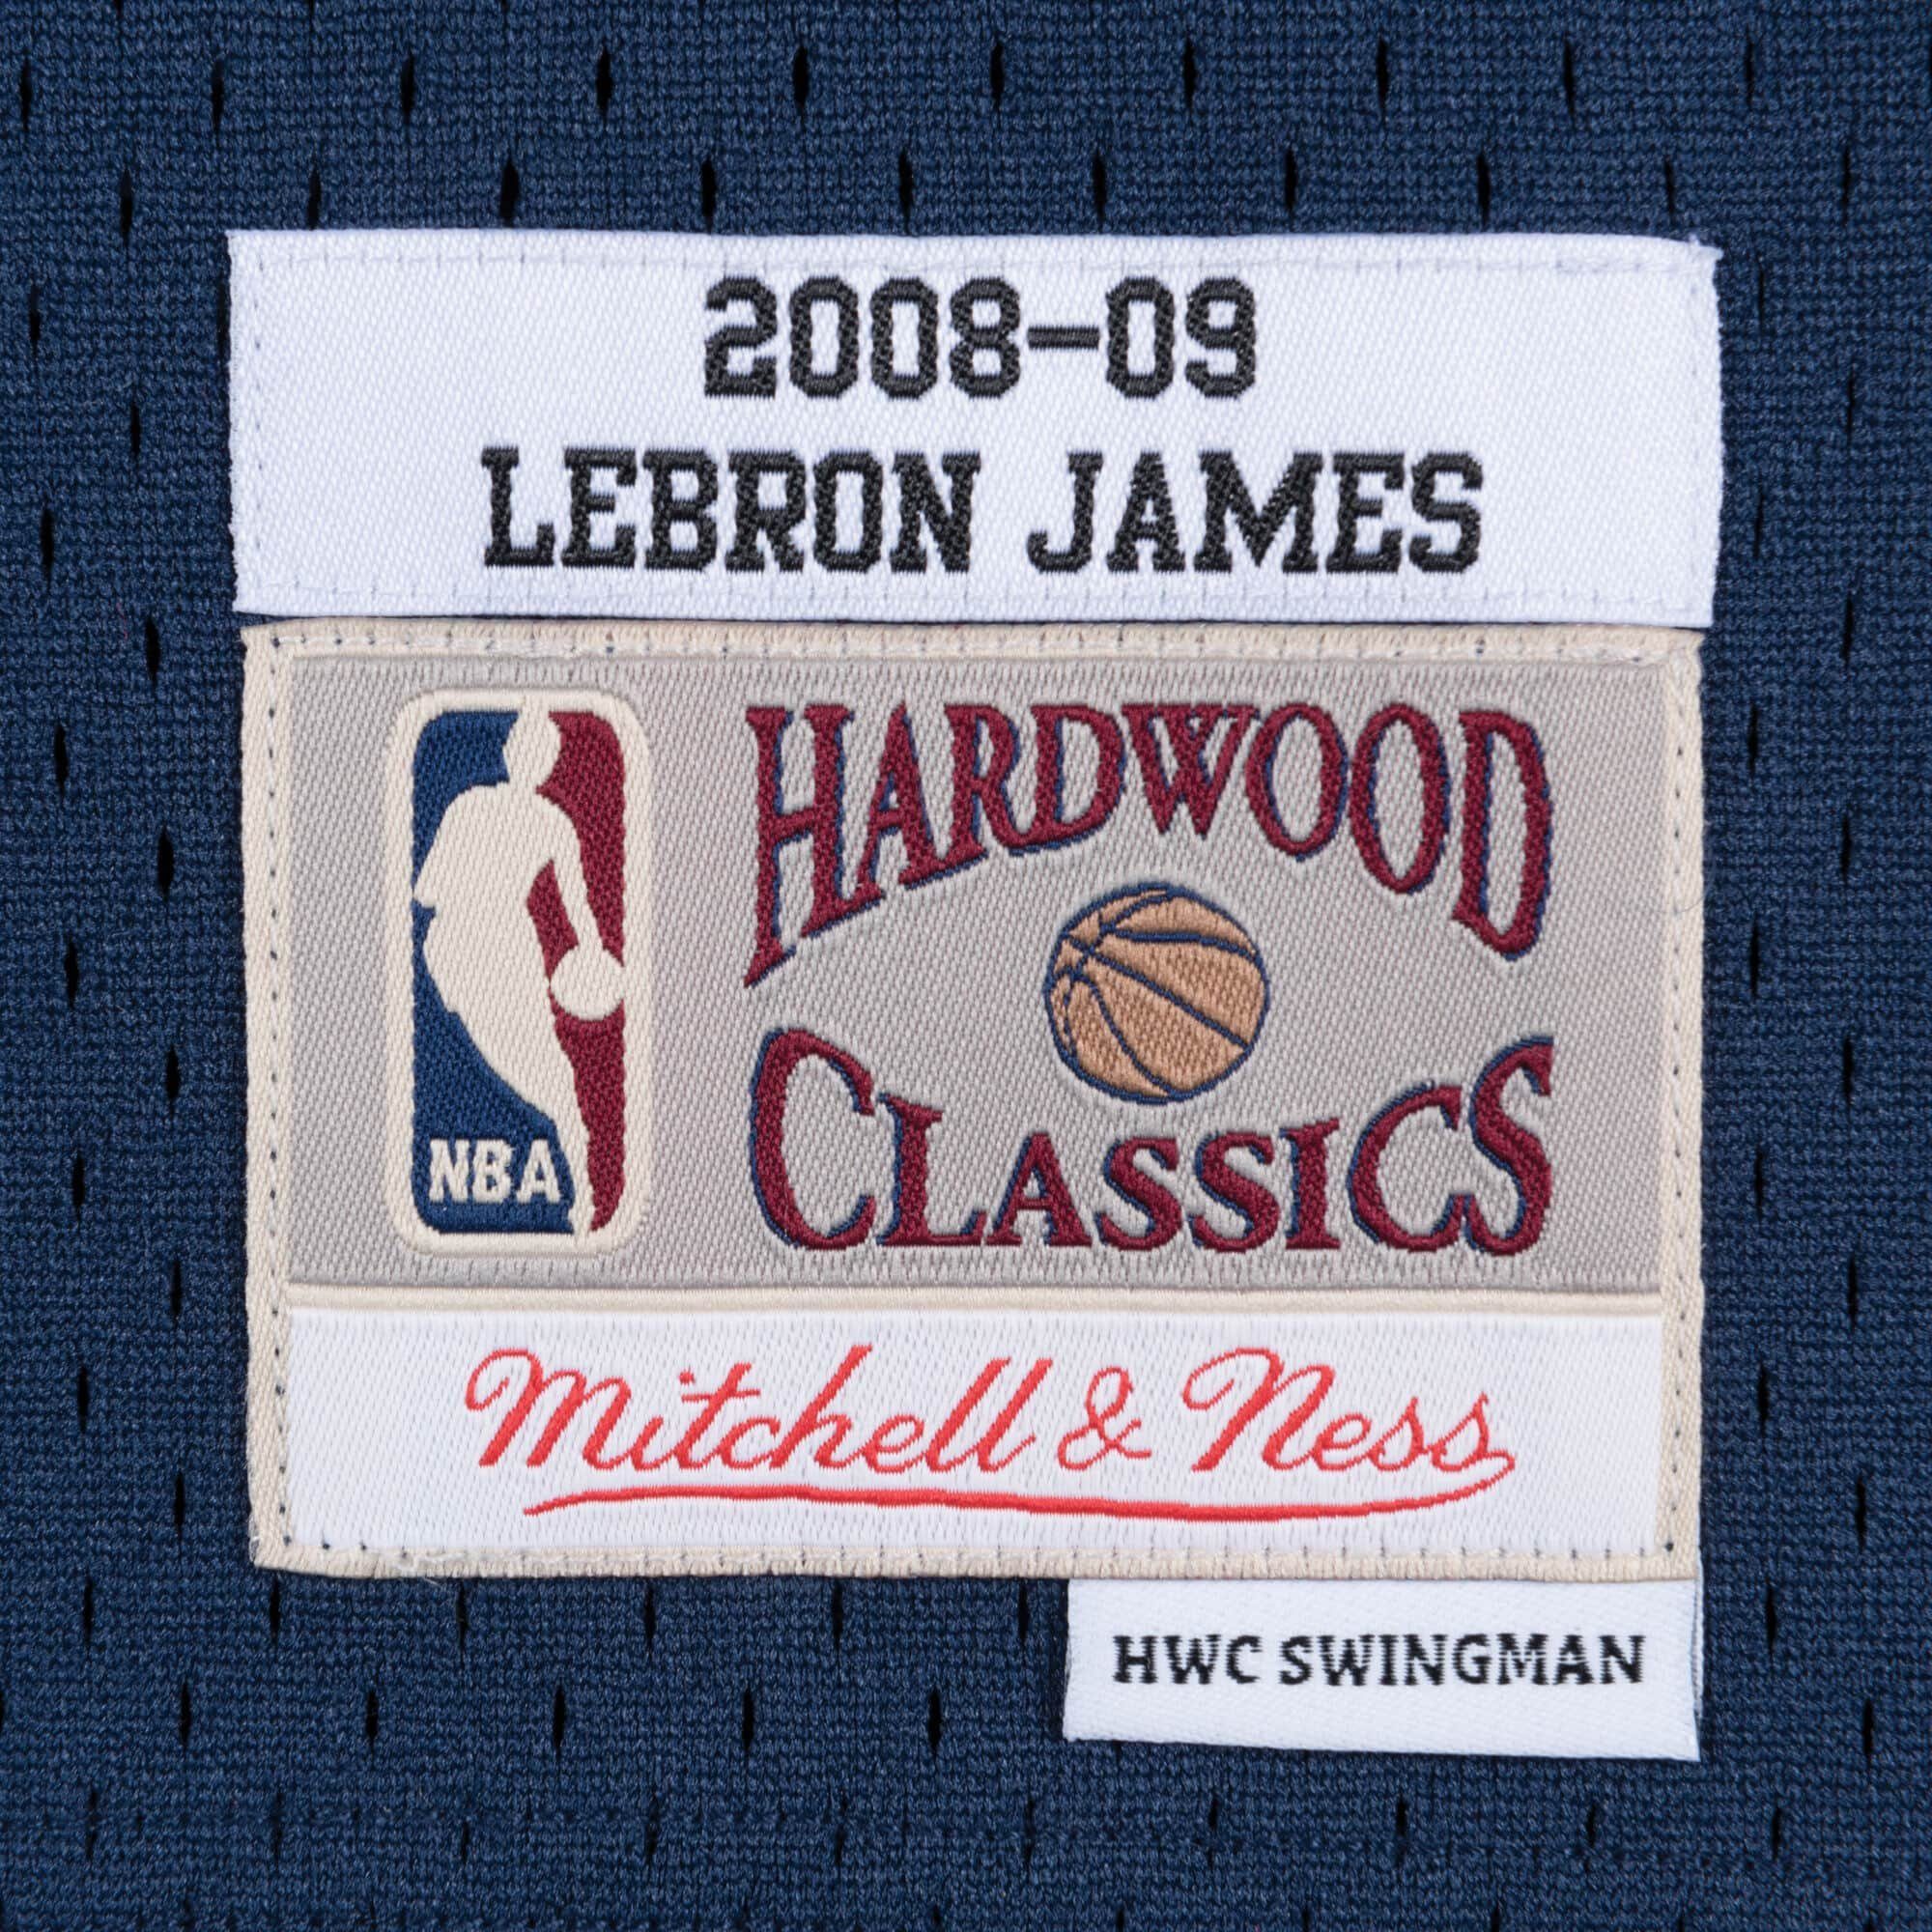 Mitchell & Ness Basketballtrikot HWC 2008-09 Cleveland Cavaliers Alternate Lebron